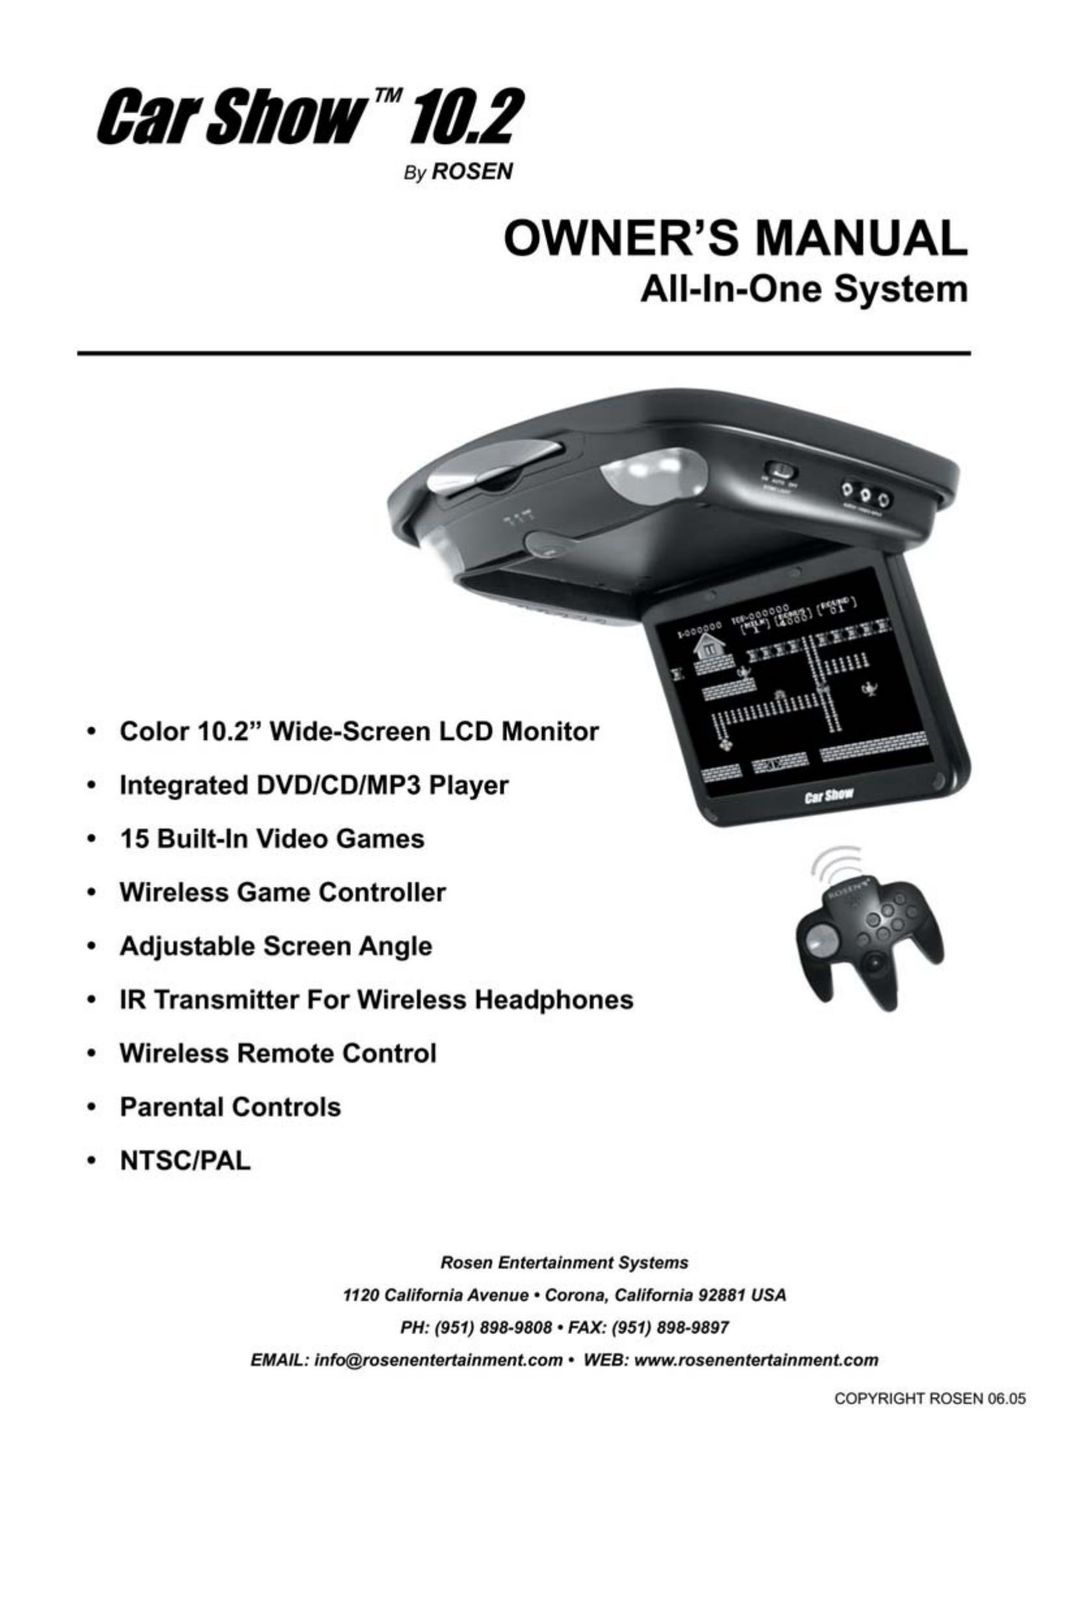 Rosen Entertainment Systems 10.2 Car Video System User Manual